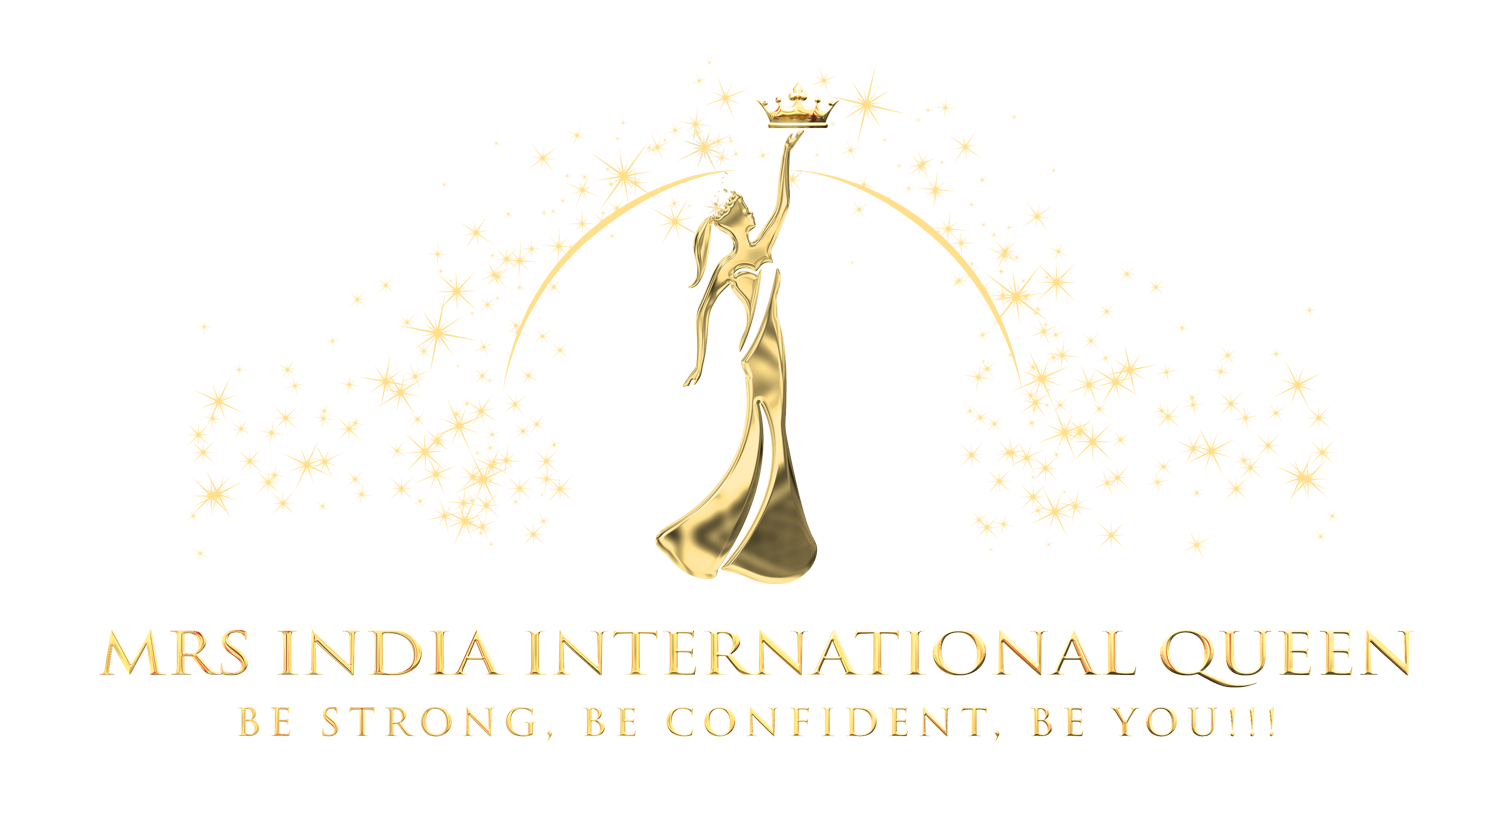 mrs india International queen CONTEST, Central Delhi, Delhi, India